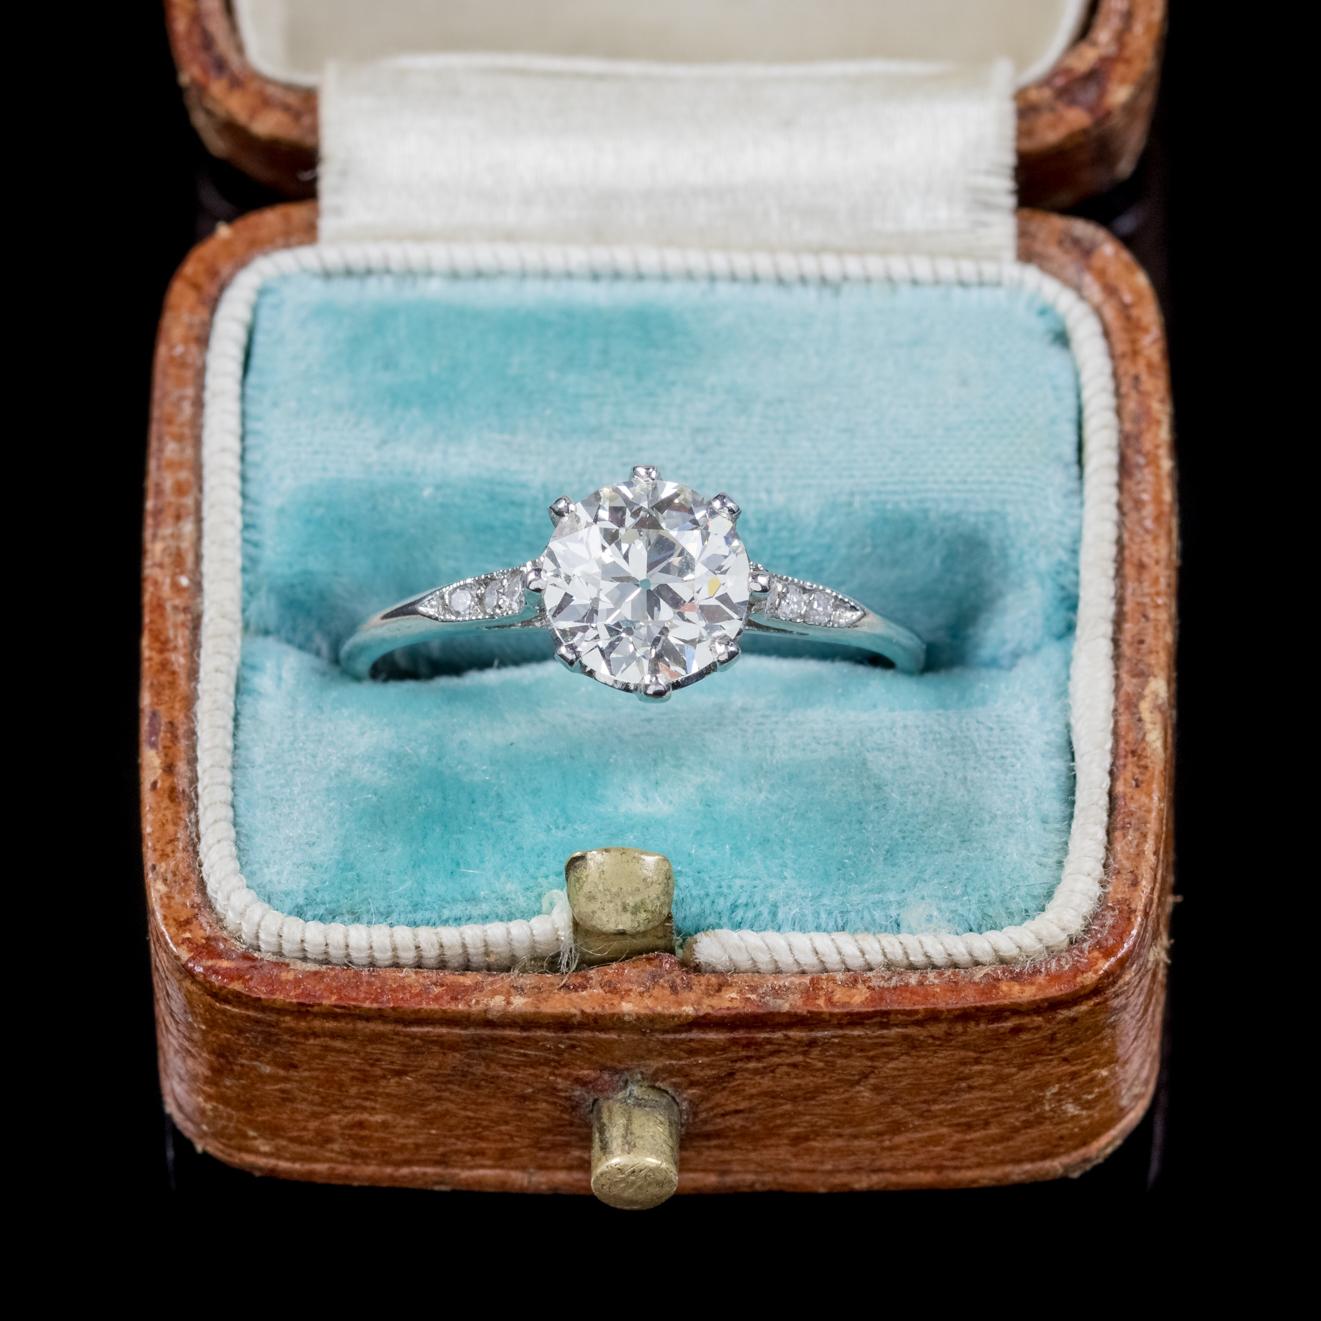 Antique Edwardian Old Cut Diamond Engagement Ring 18 Carat Gold, circa 1910 For Sale 2